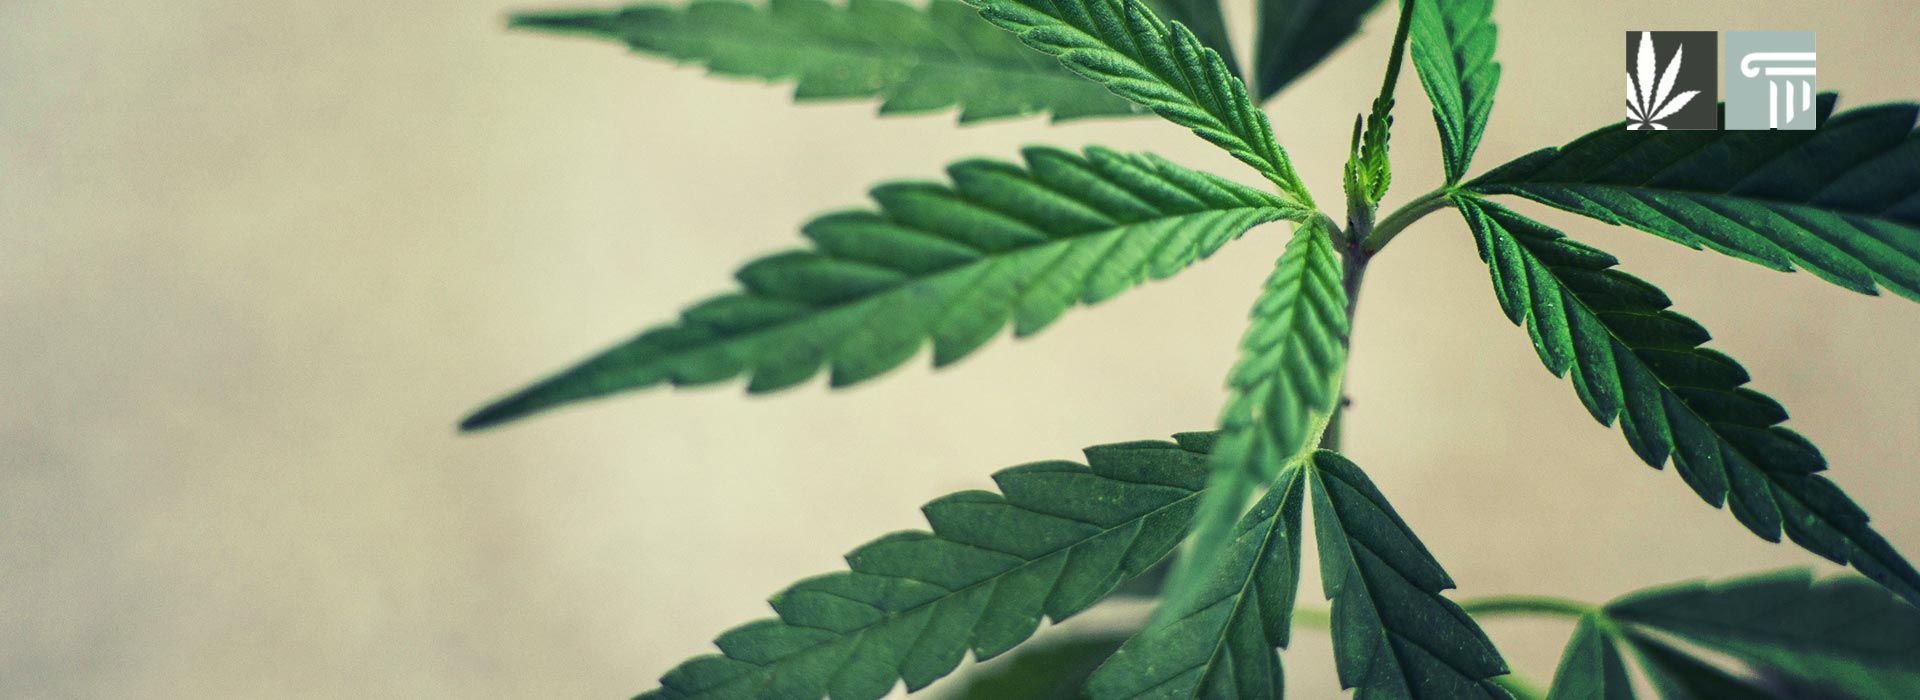 minnesota marijuana legalization